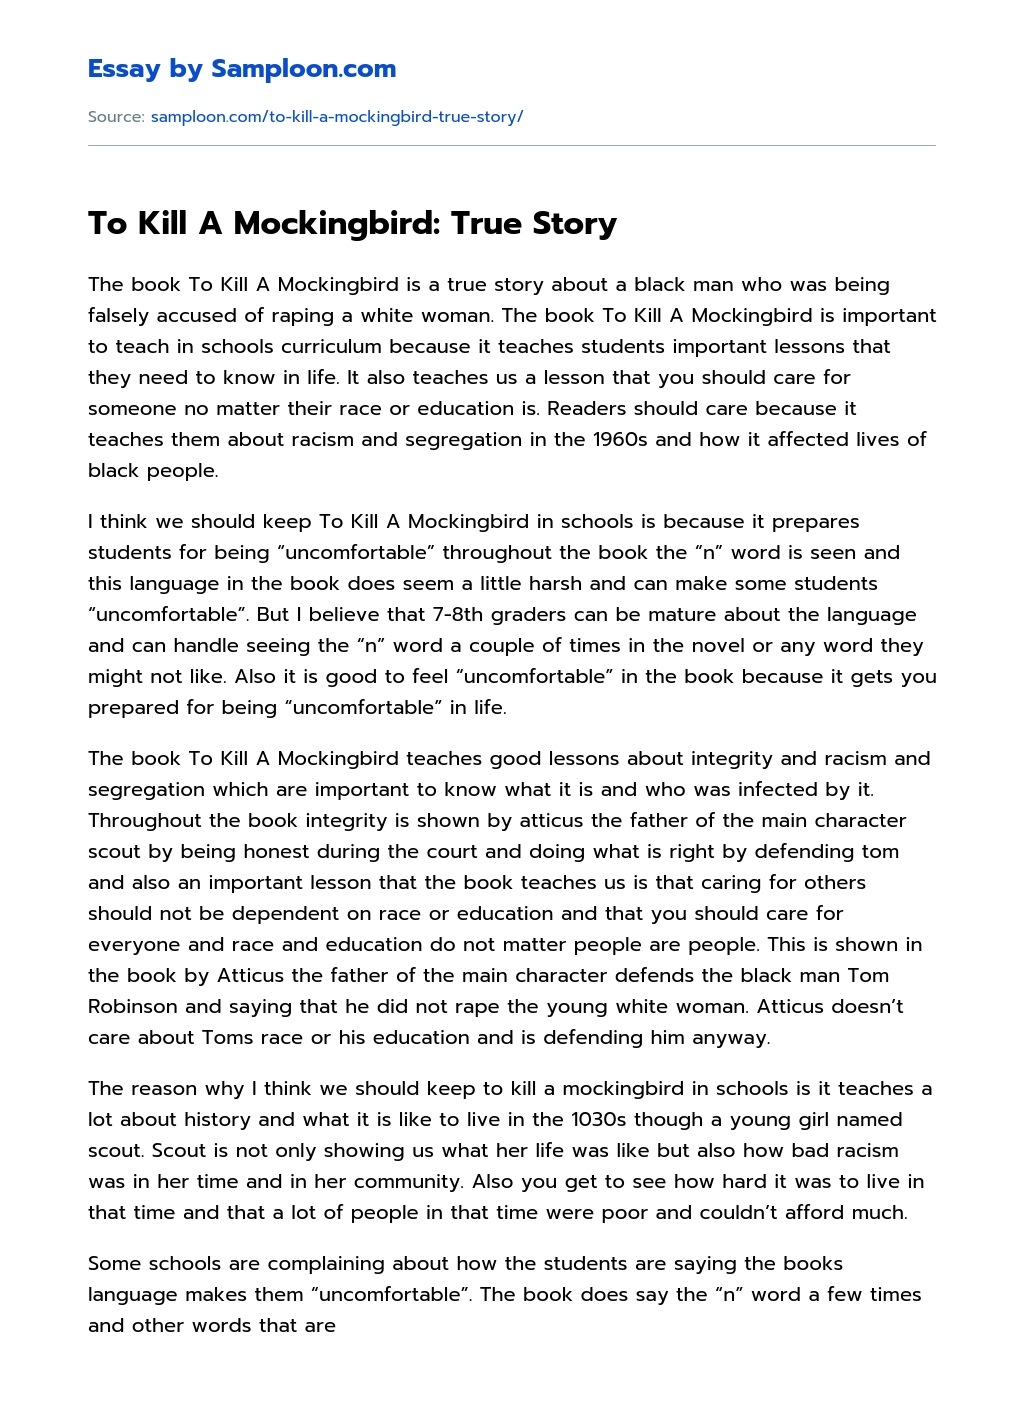 To Kill A Mockingbird: True Story essay